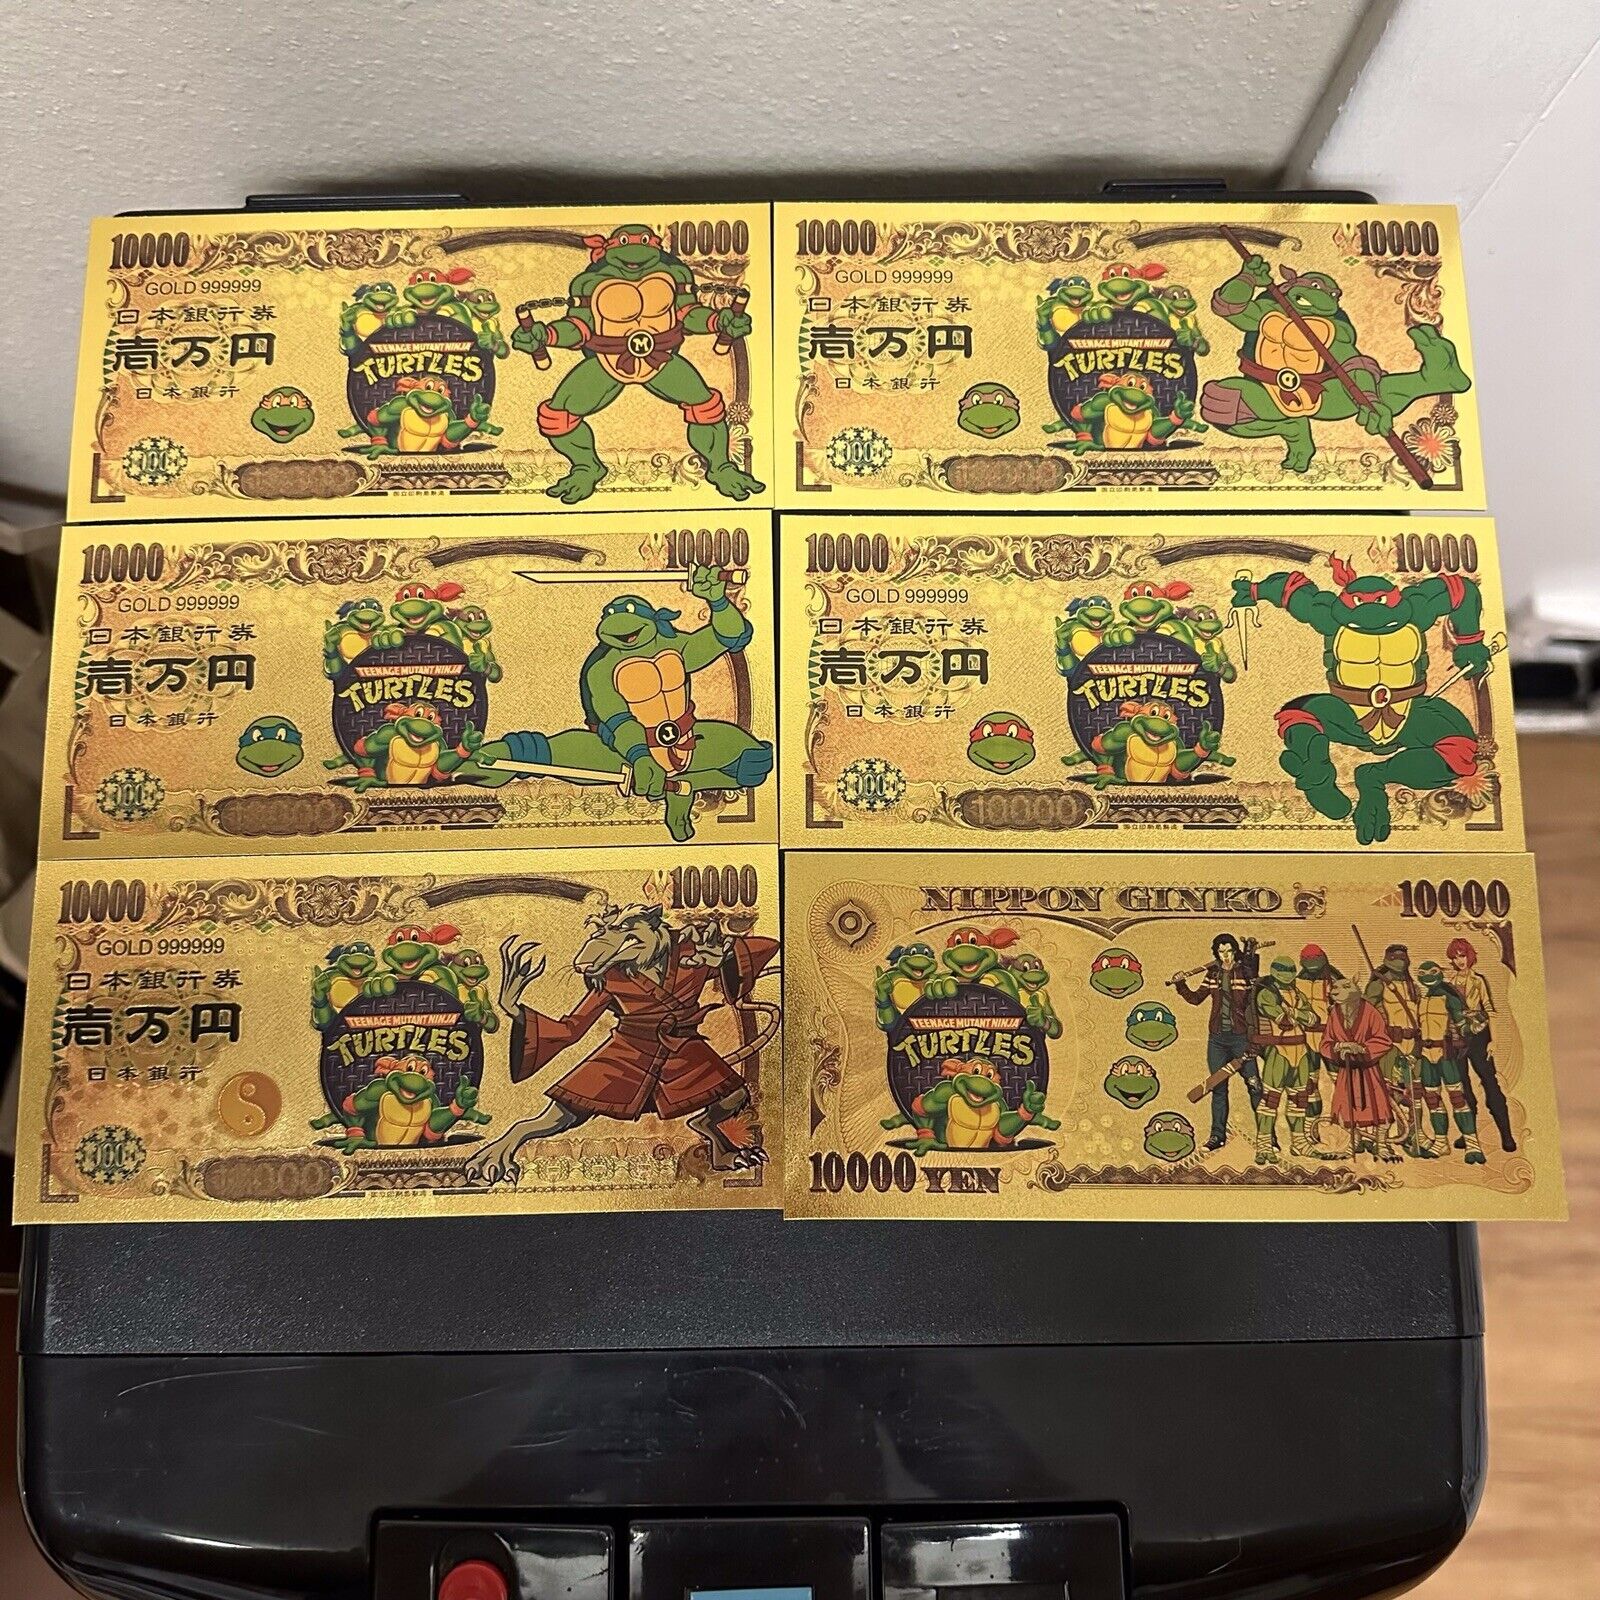 24k Gold Foil Plated Teenage Mutant Ninja Turtles Banknote Set TMNT Collectible